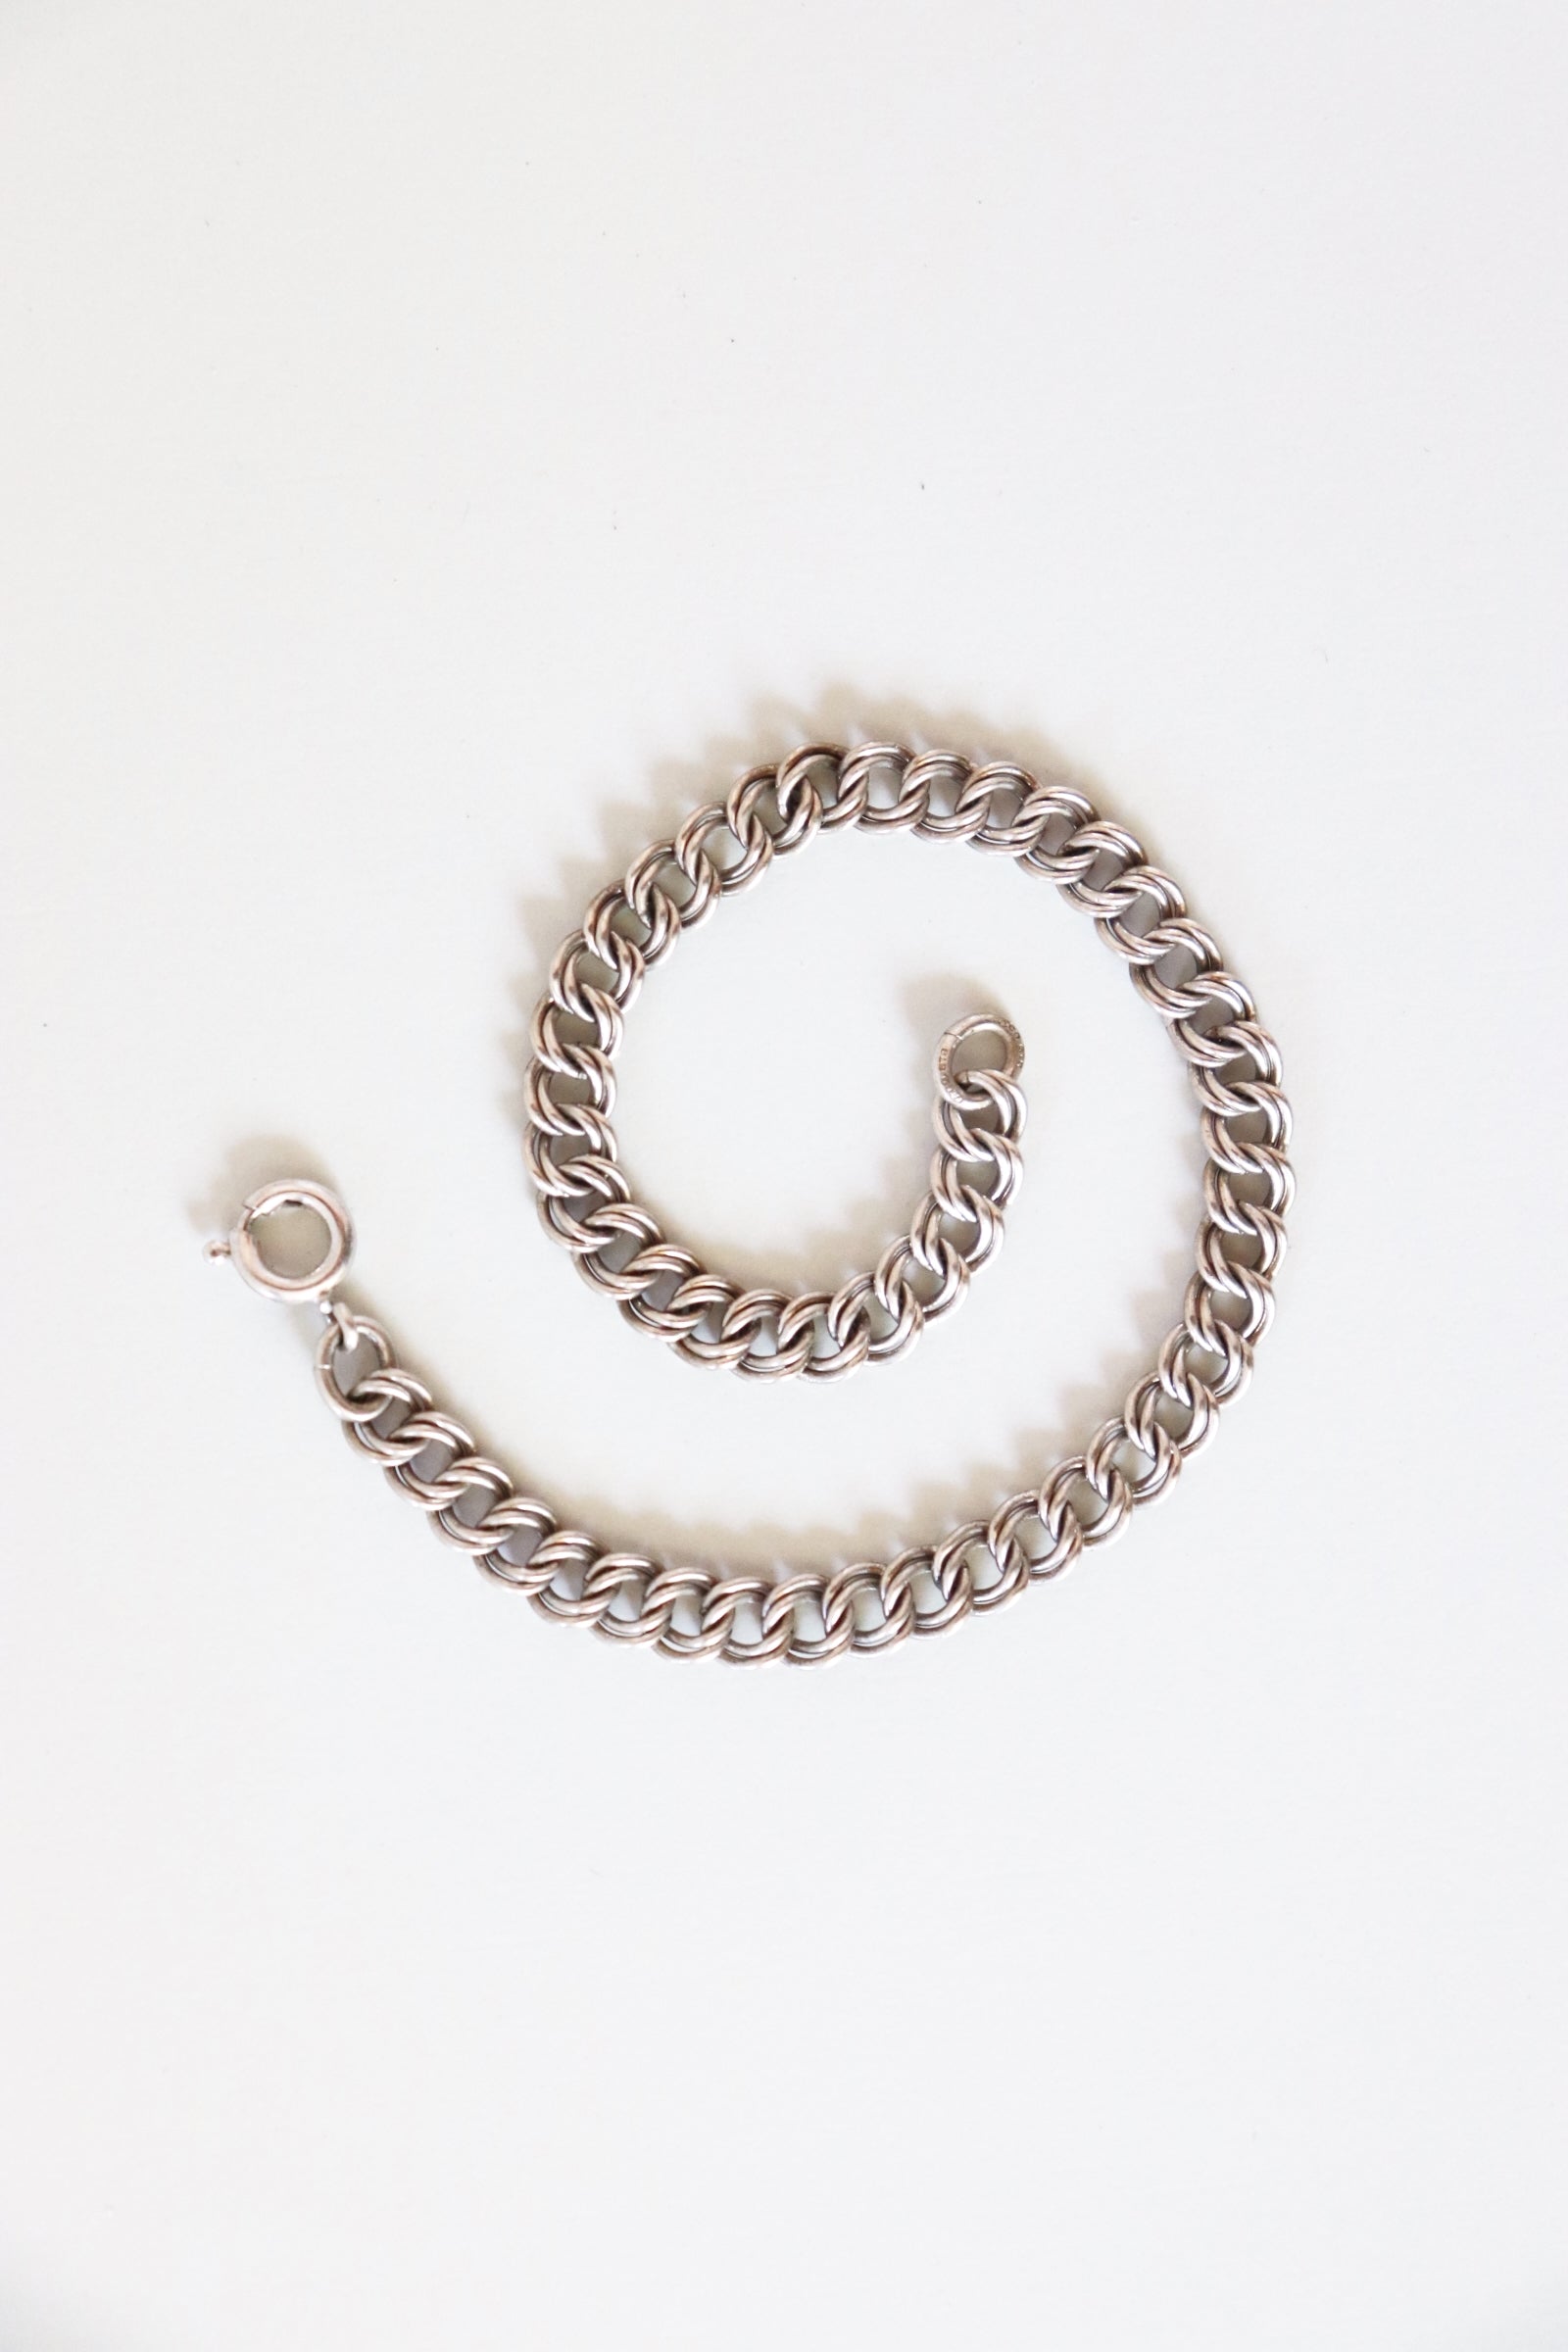 Vintage Double Curb Link Sterling Silver Charm Bracelet